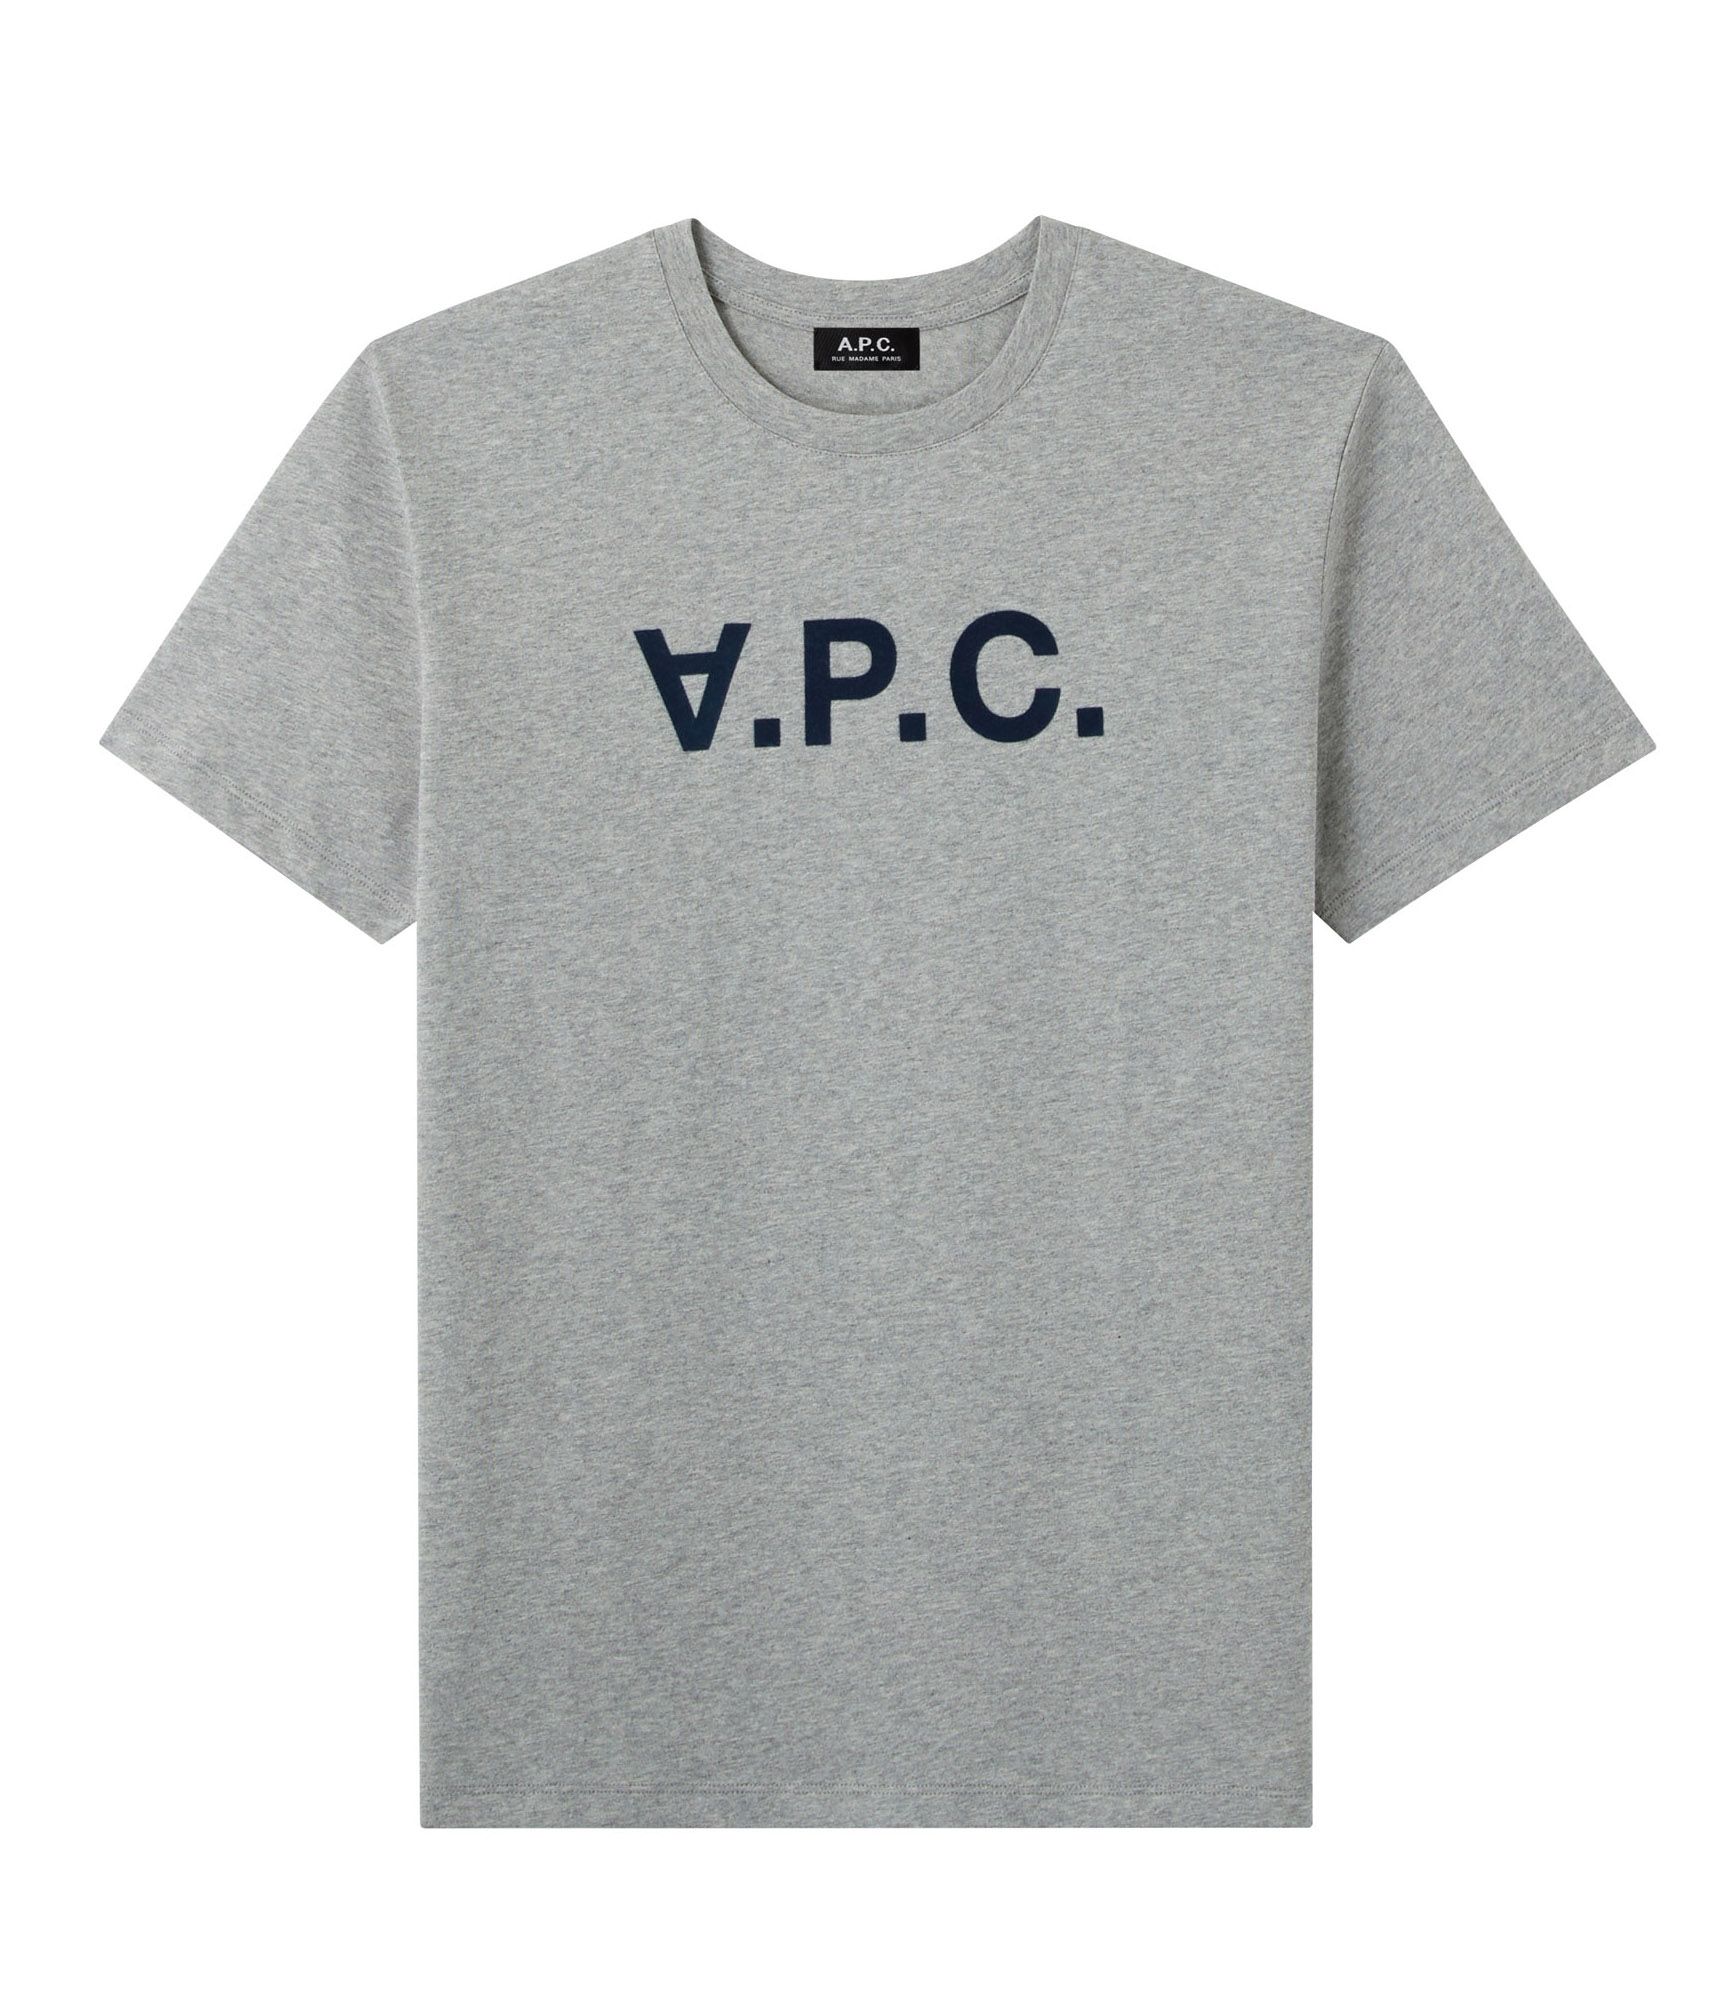 A.P.C. Heather Grey VPC T Shirt